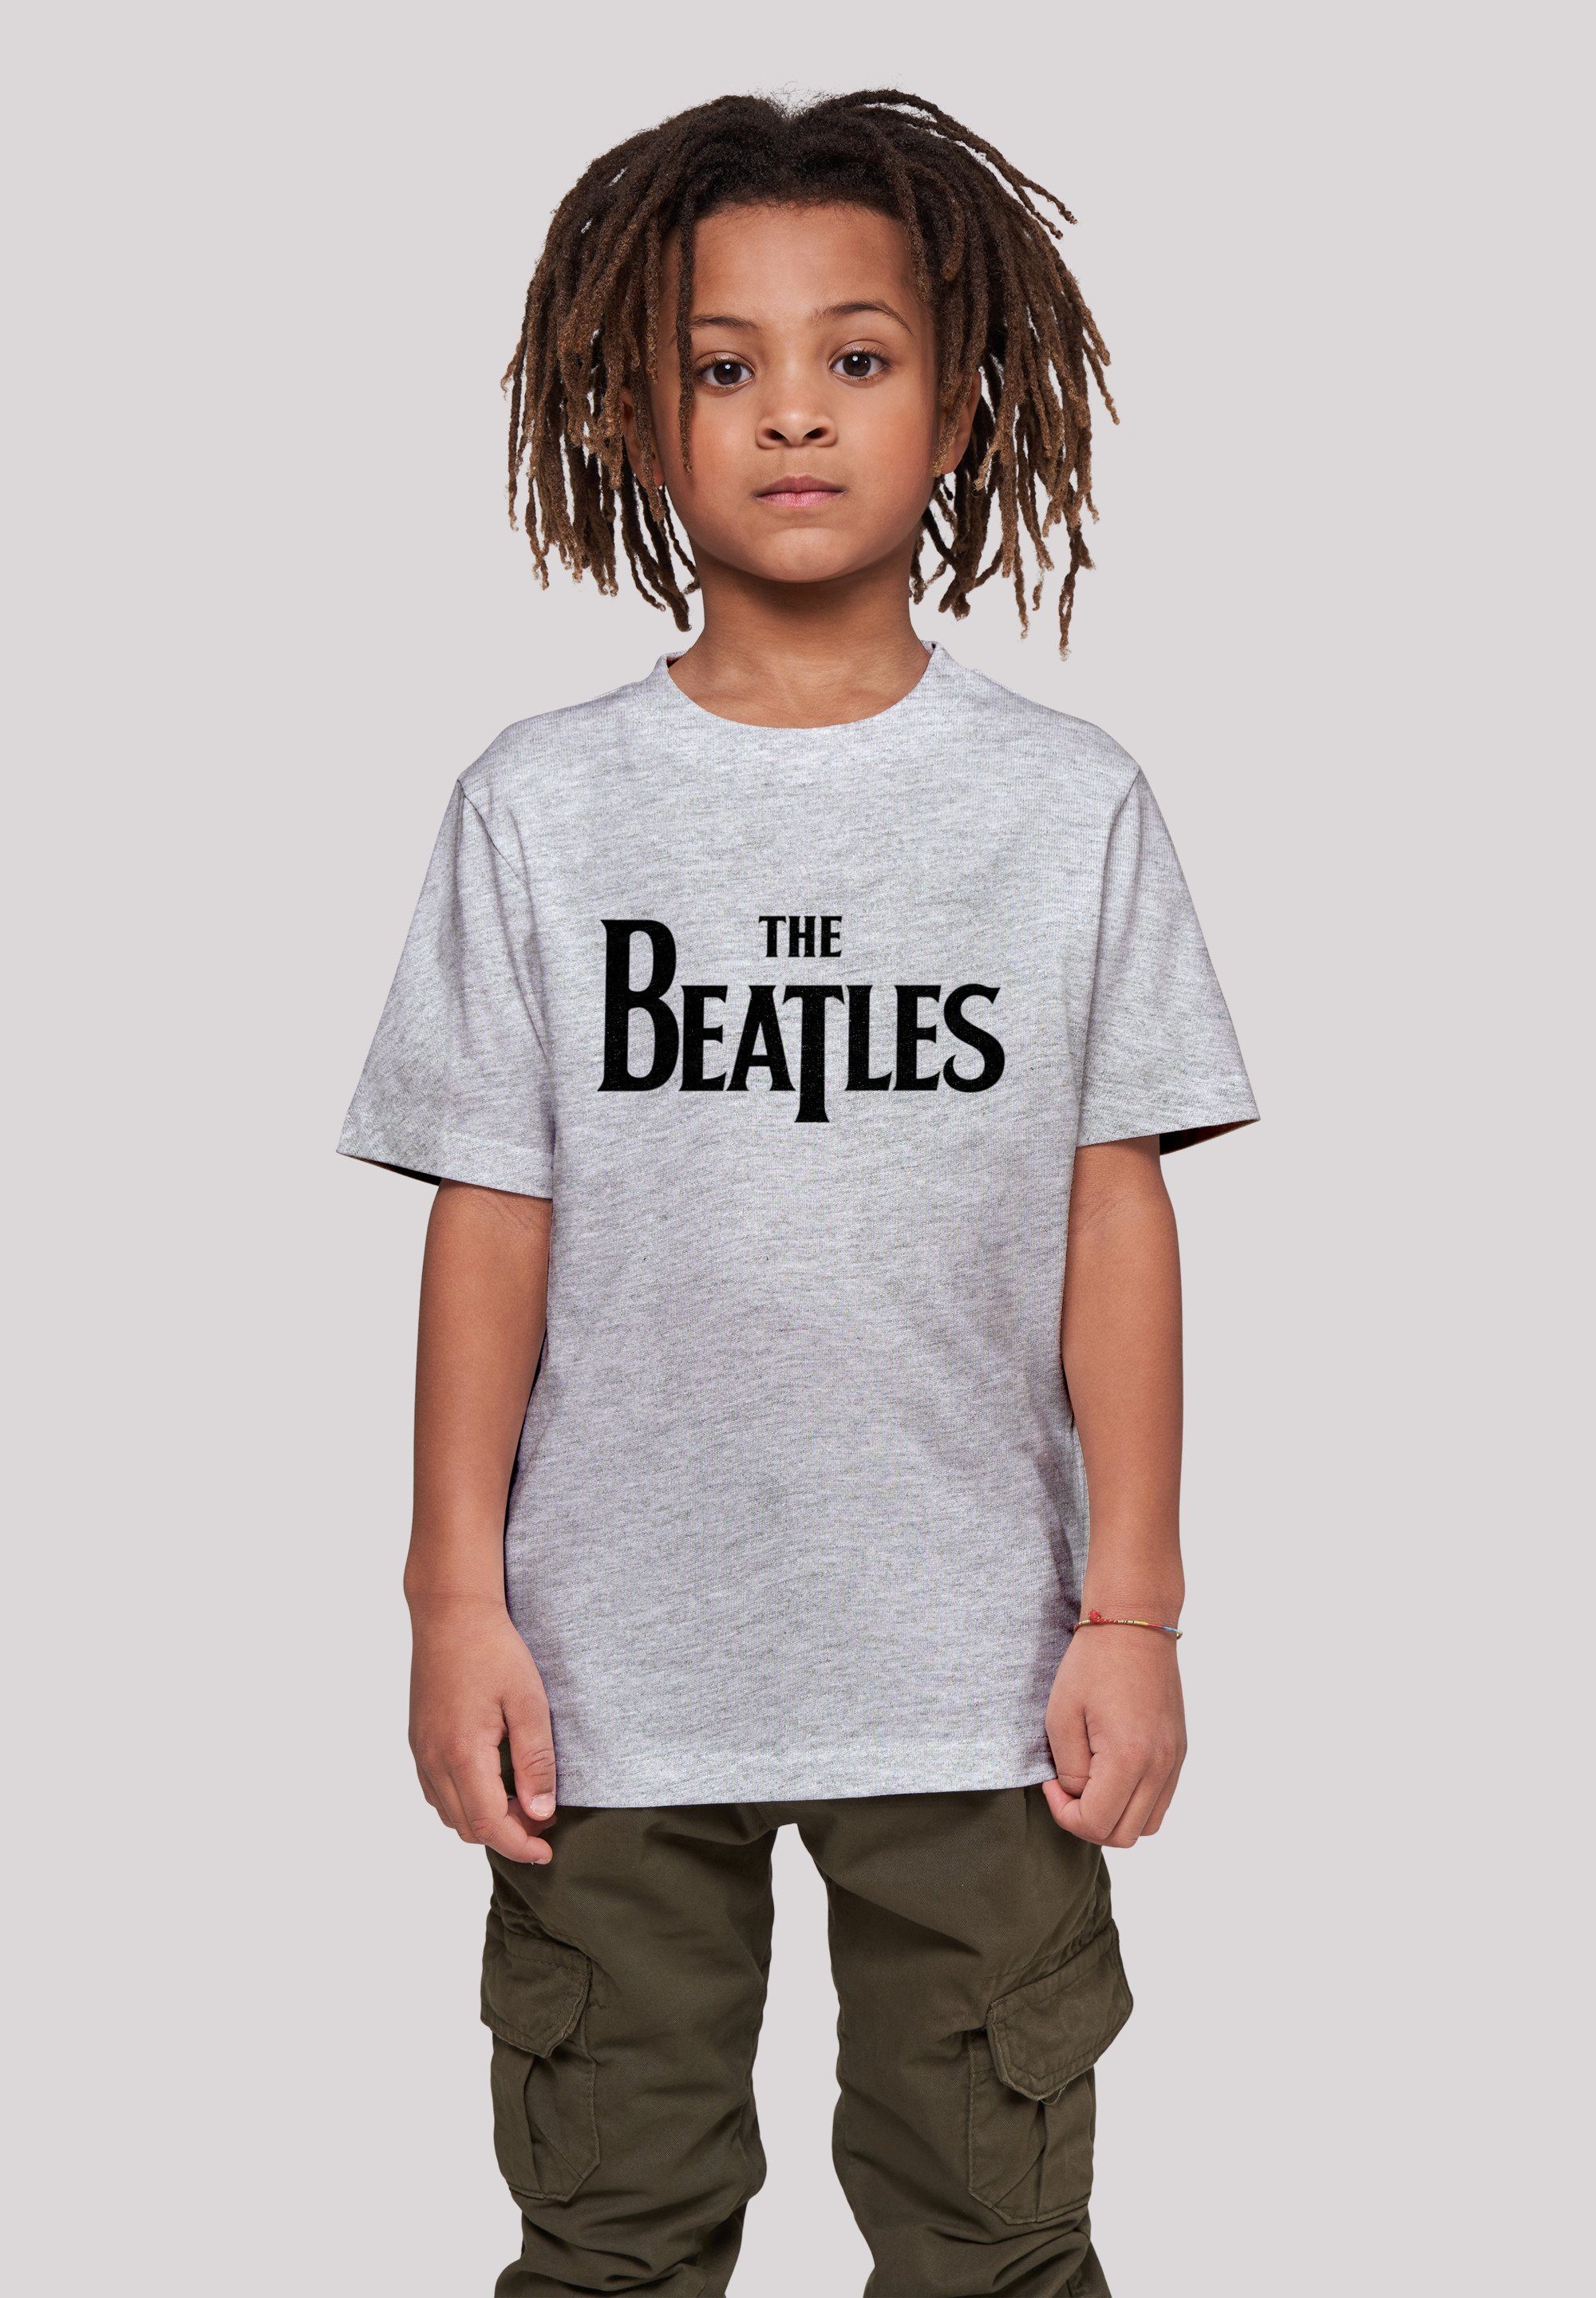 The Black Logo Print heather T-Shirt grey Beatles T F4NT4STIC Band Drop